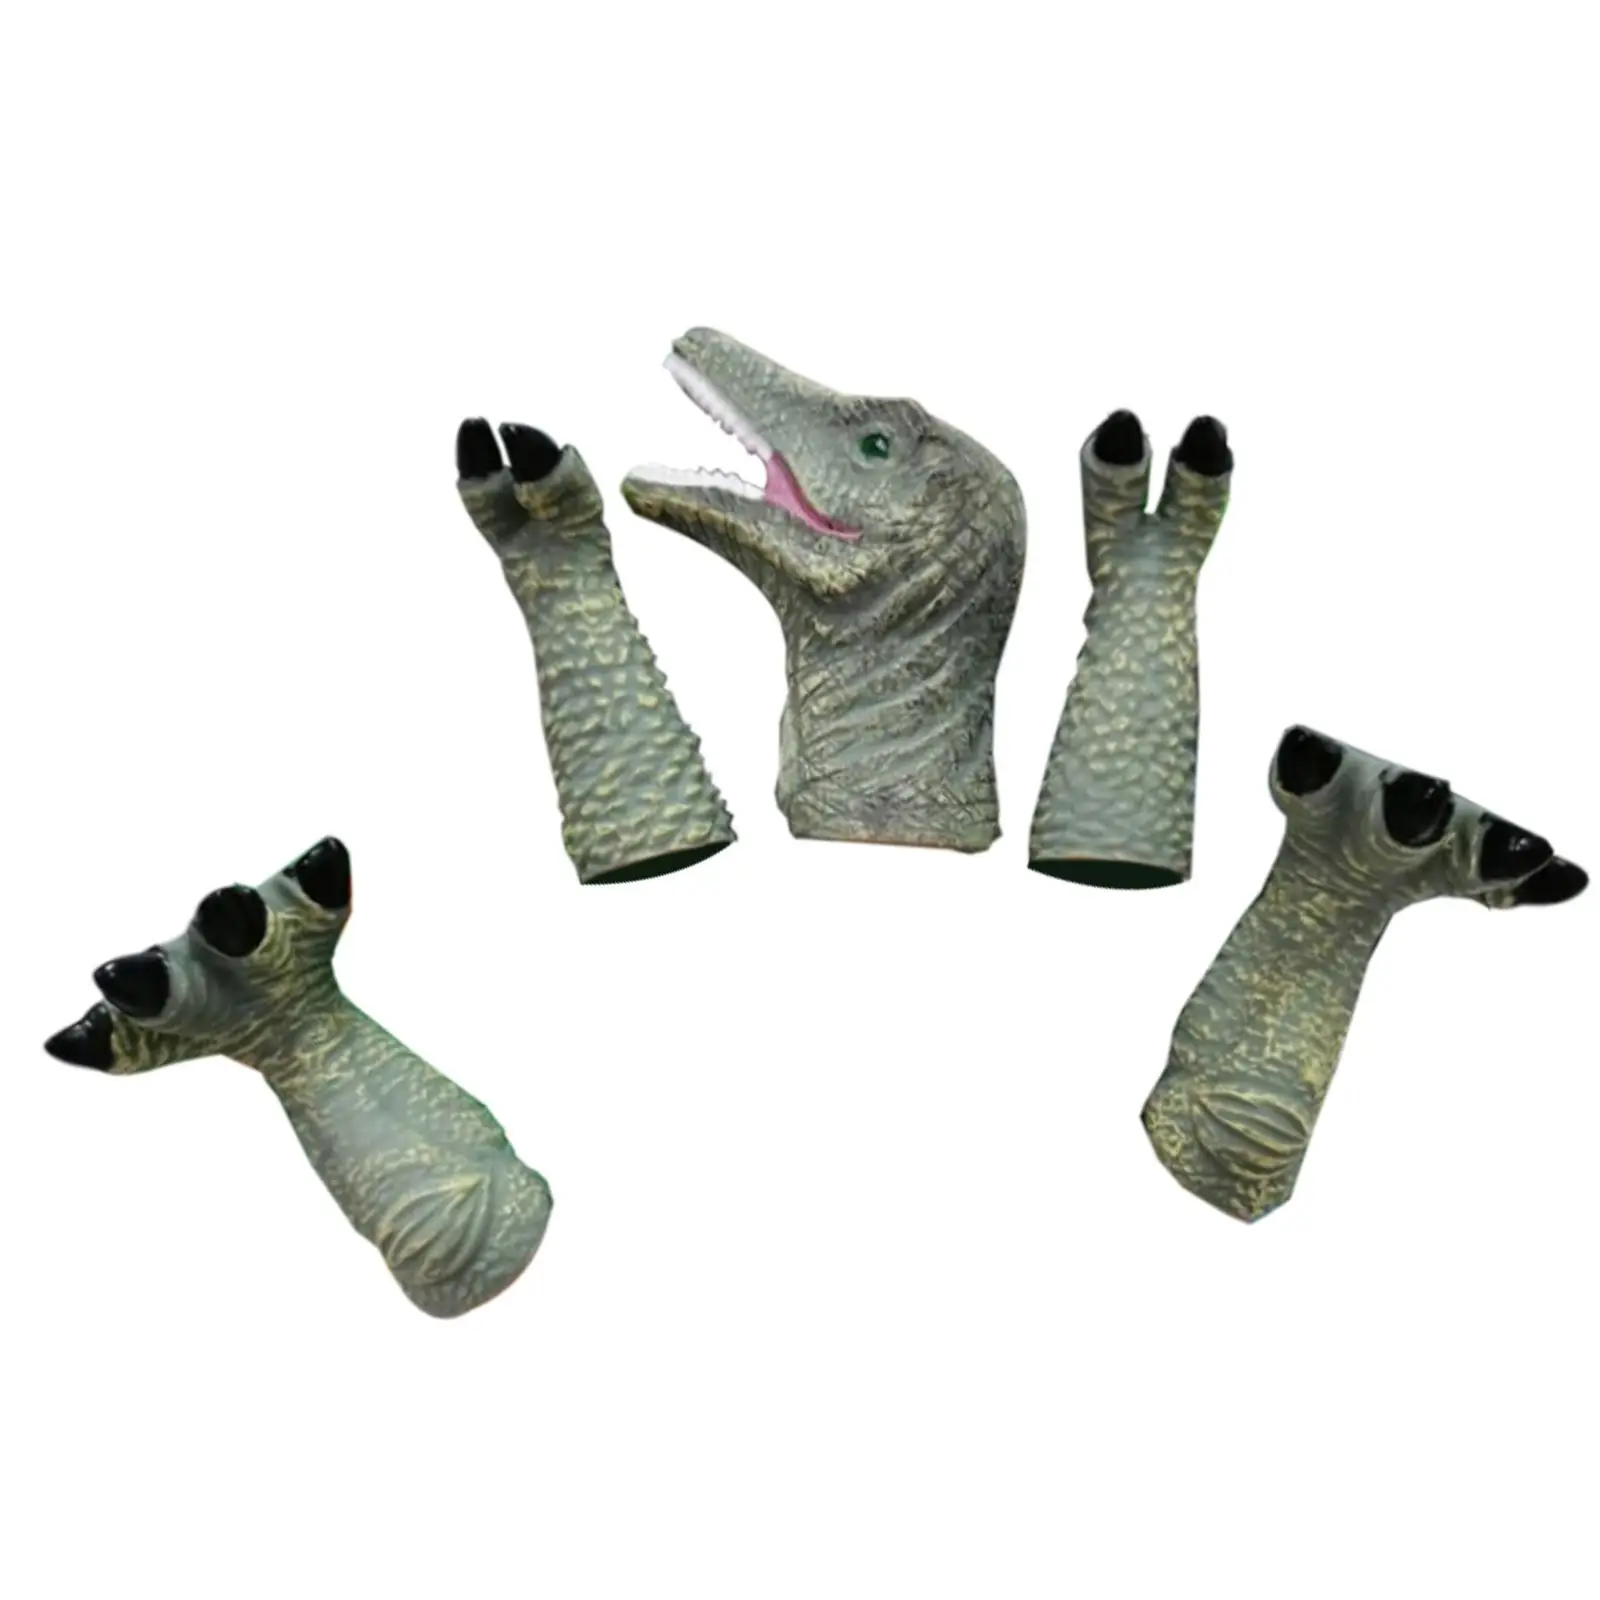 5x Dinosaur Finger Puppets Toys Realistic Animal Heads Finger Toys for Kids Children Easter Basket Stuffers Early Educational